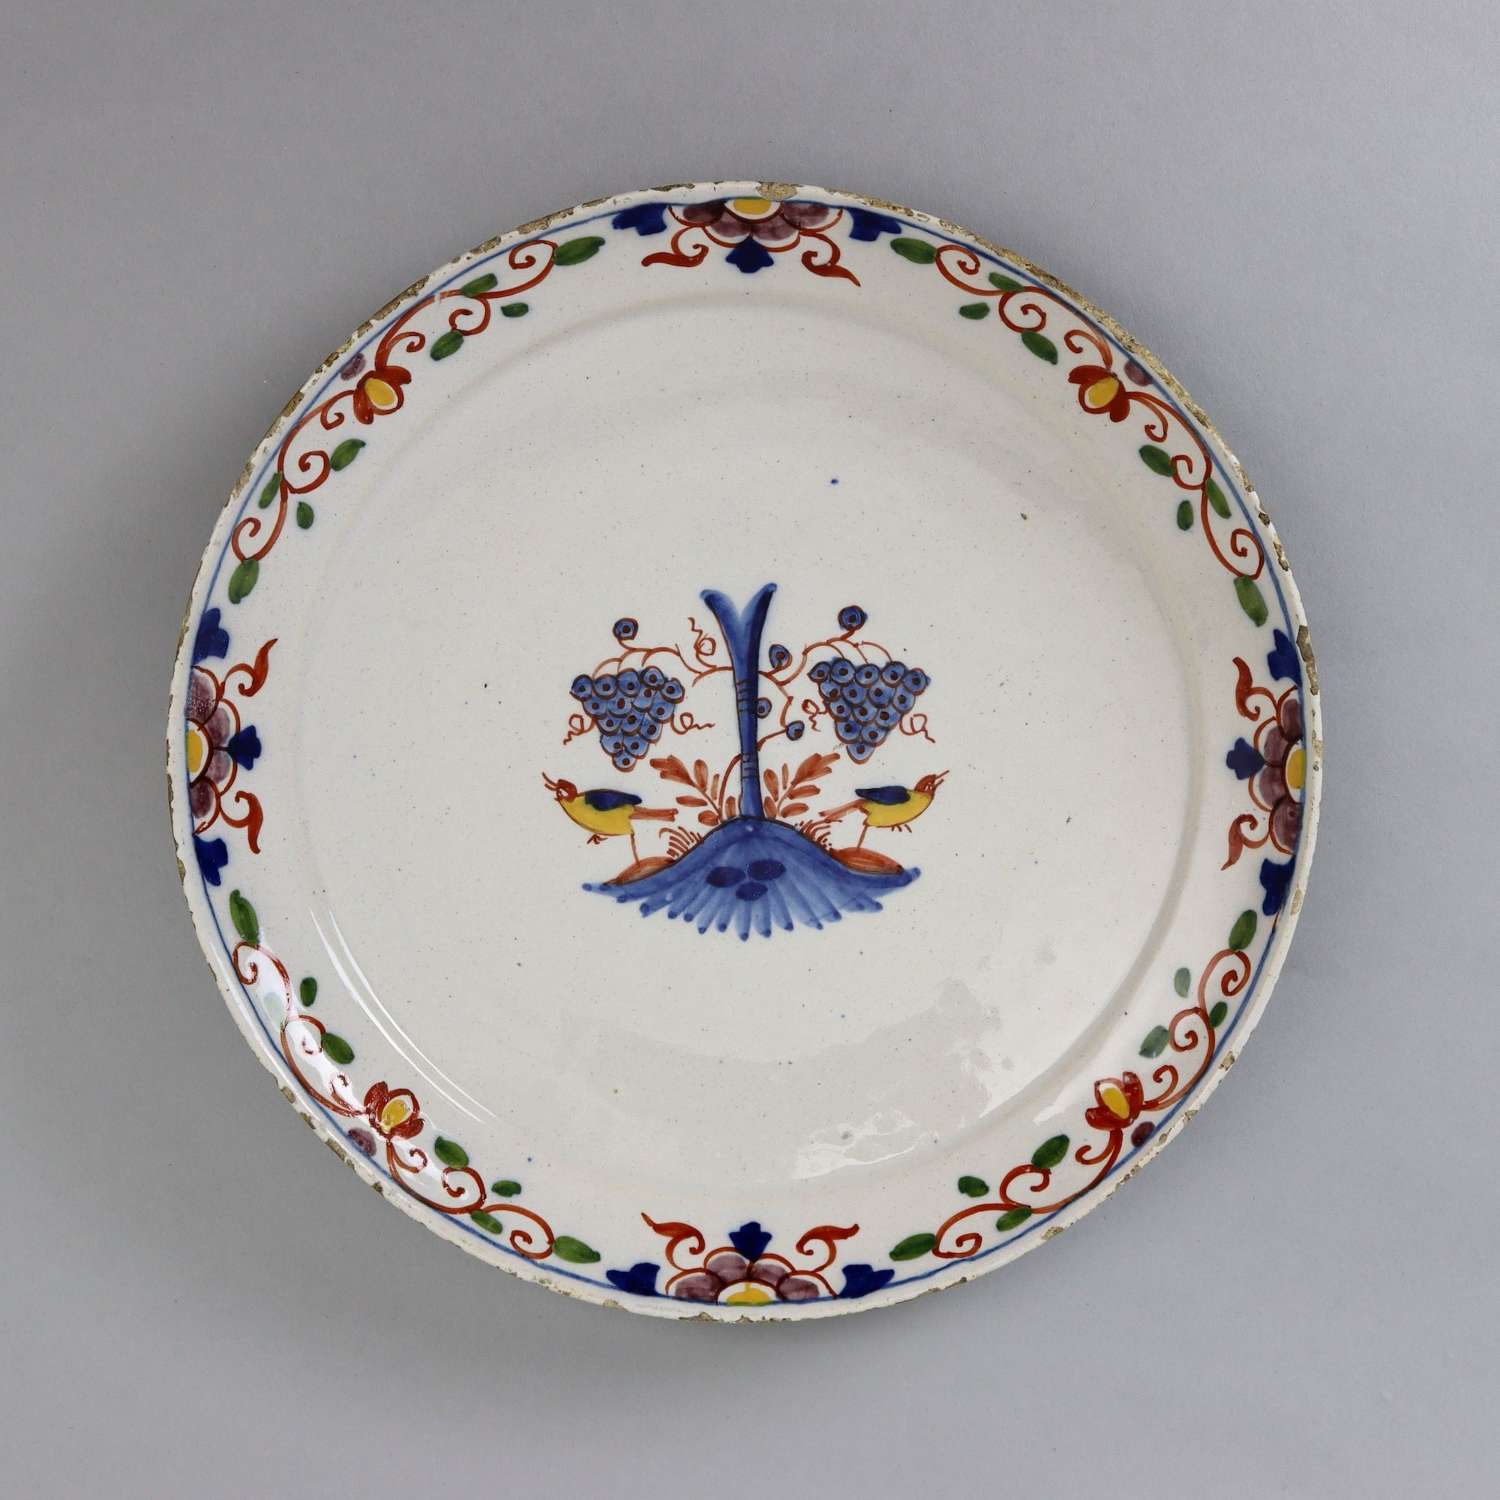 Unusual, Dutch Delft Plate